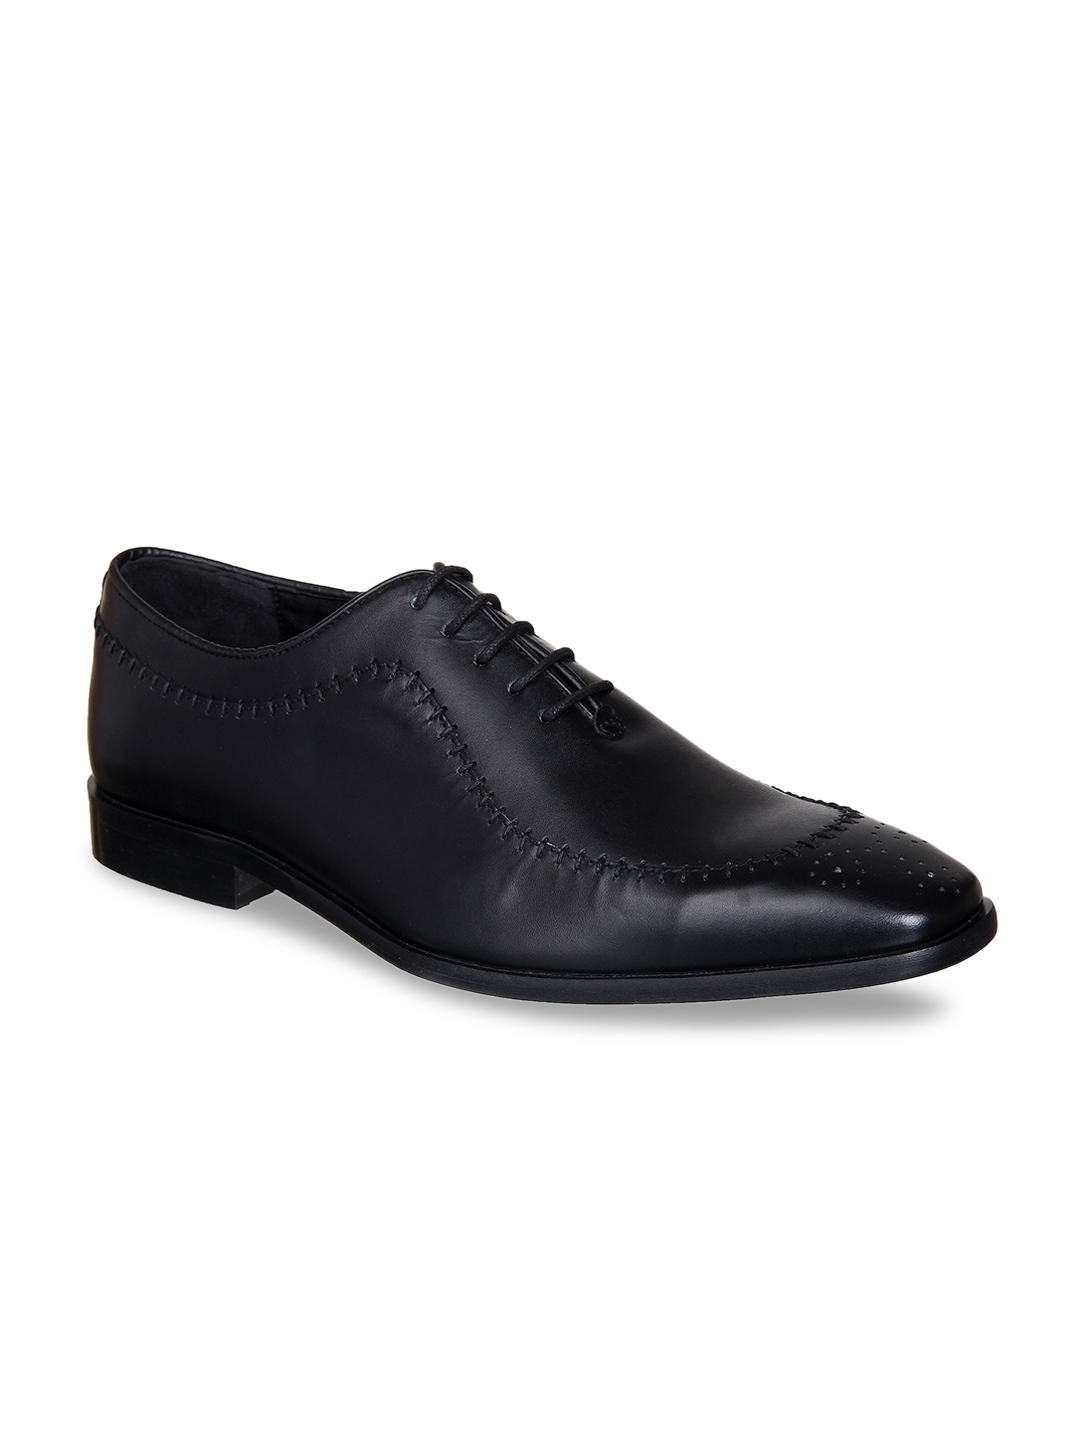 Buy LOZANO Men Black Woven Design Leather Formal Oxfords - Formal Shoes ...